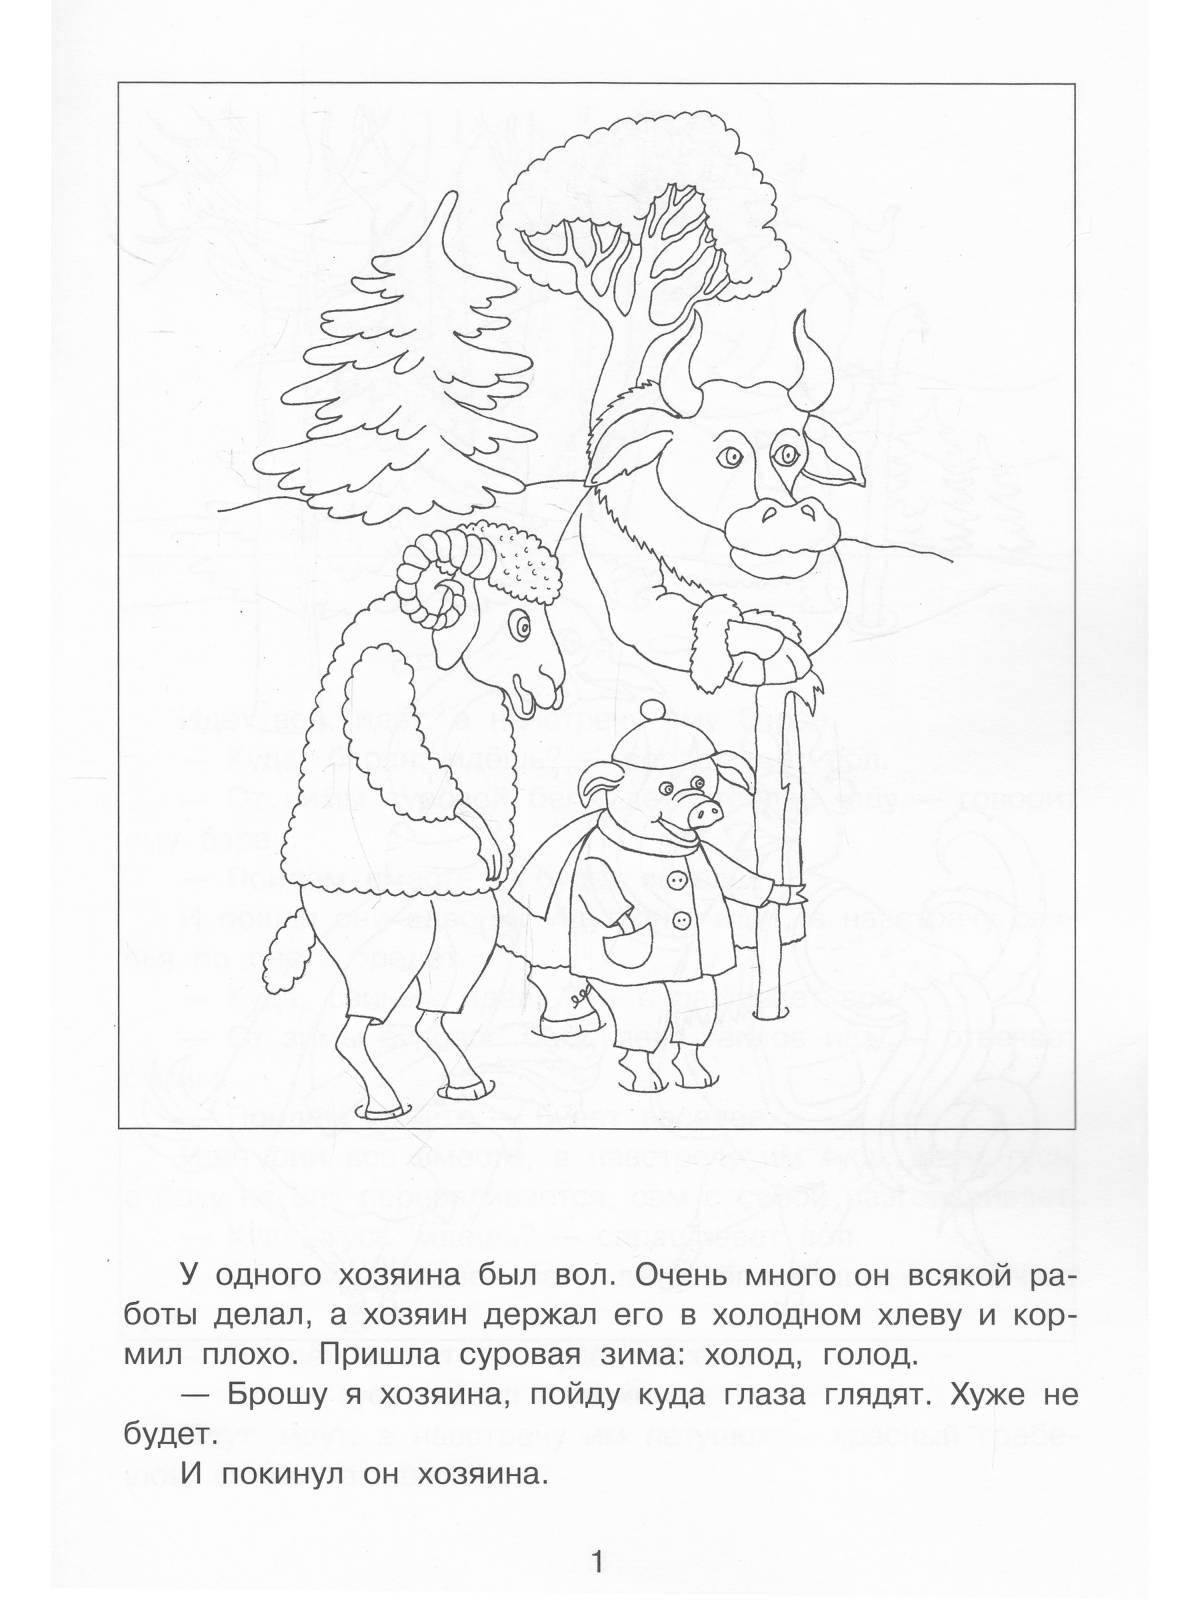 Living winter animal hut coloring book